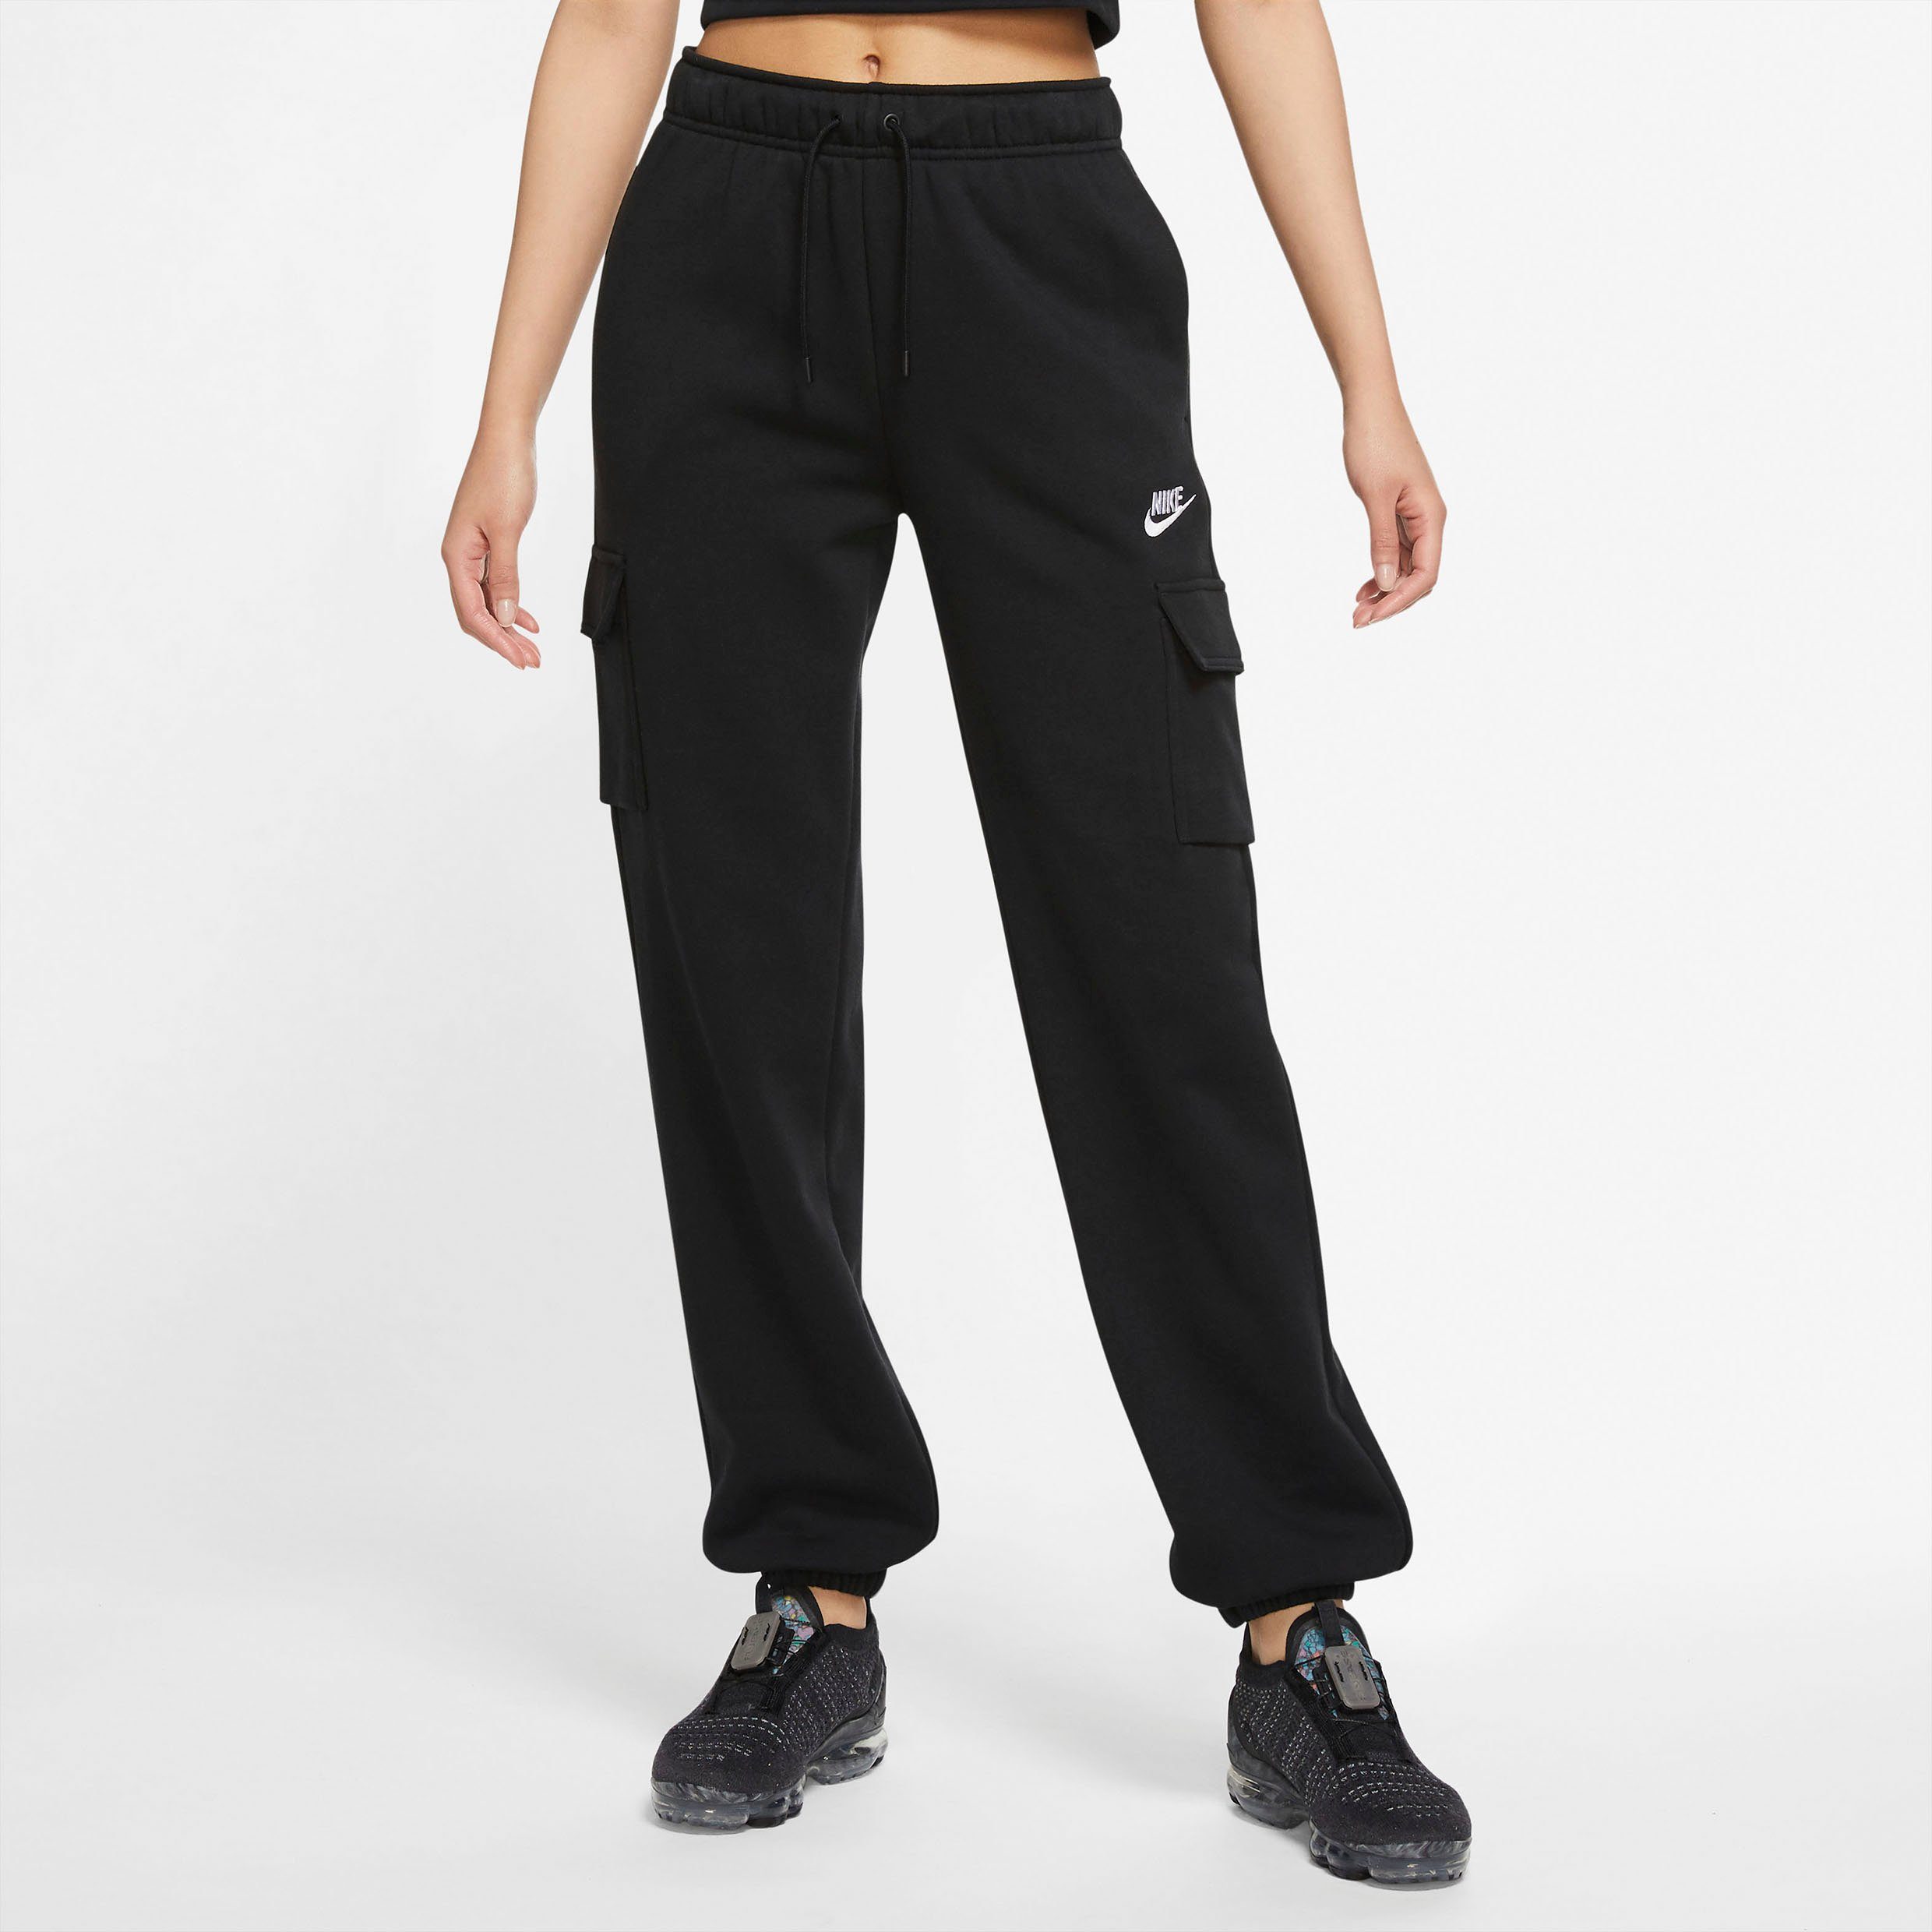 Nike Damen Jogginghosen online kaufen » Sweatpants | OTTO